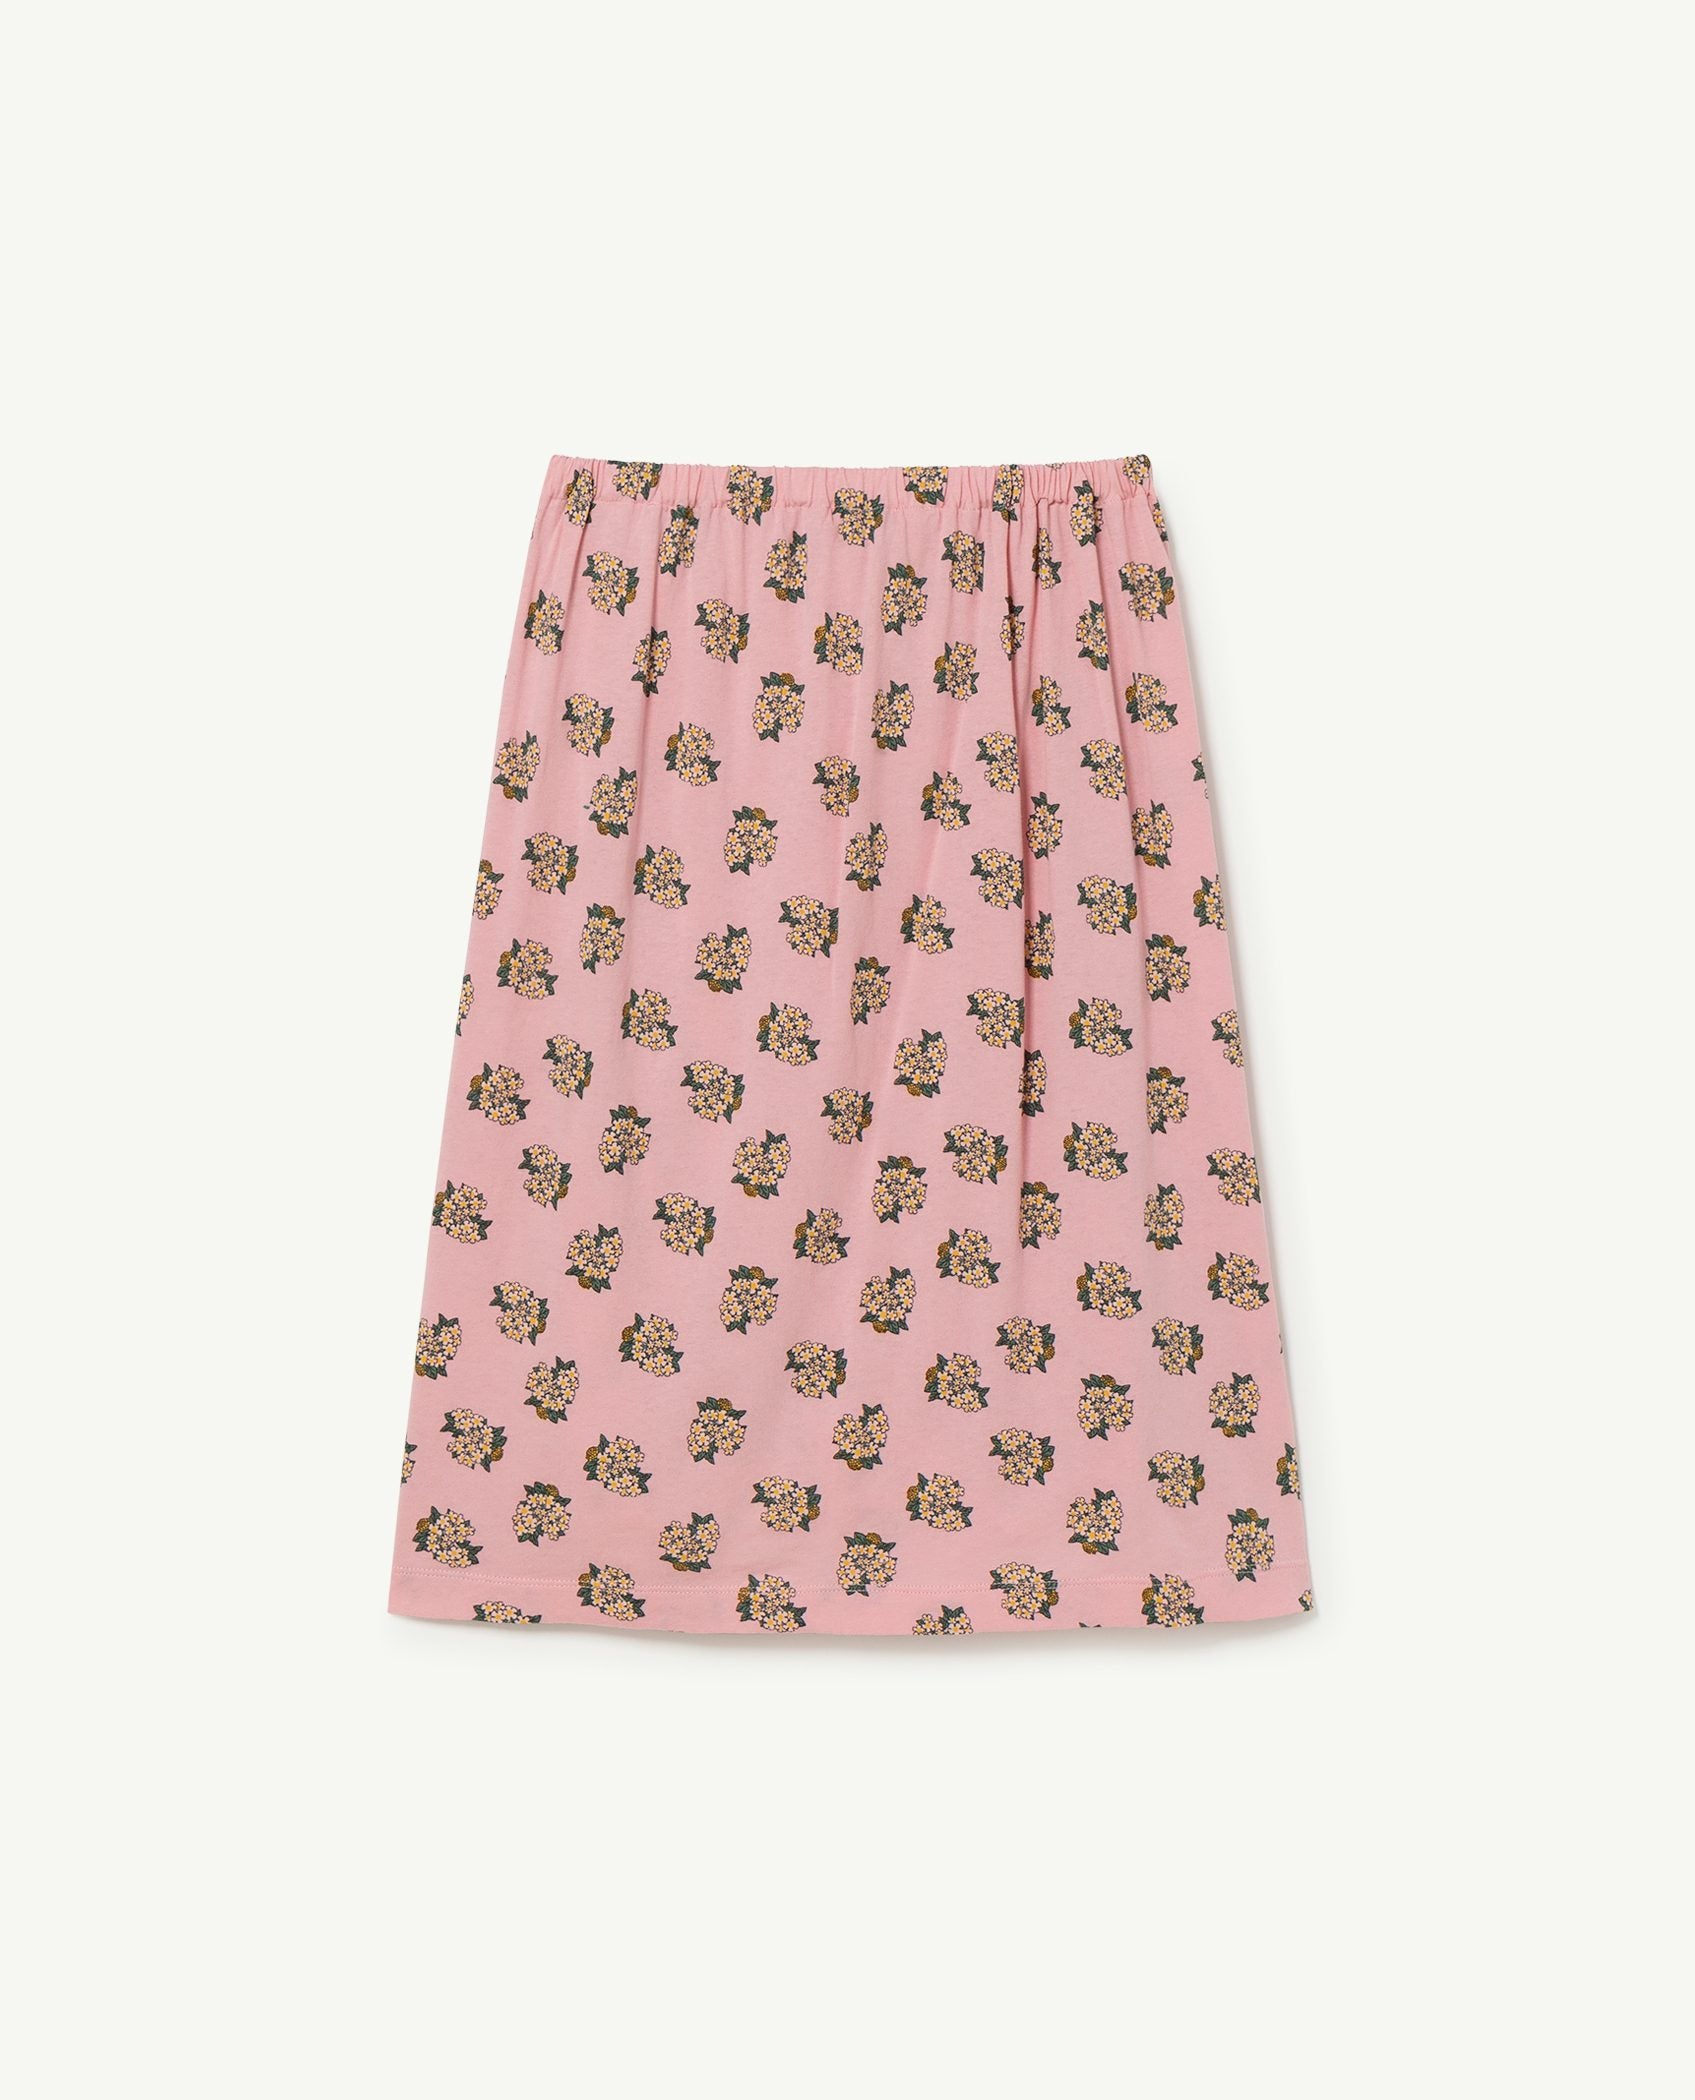 Pink Flowers Ladybug Kids Skirt PRODUCT BACK